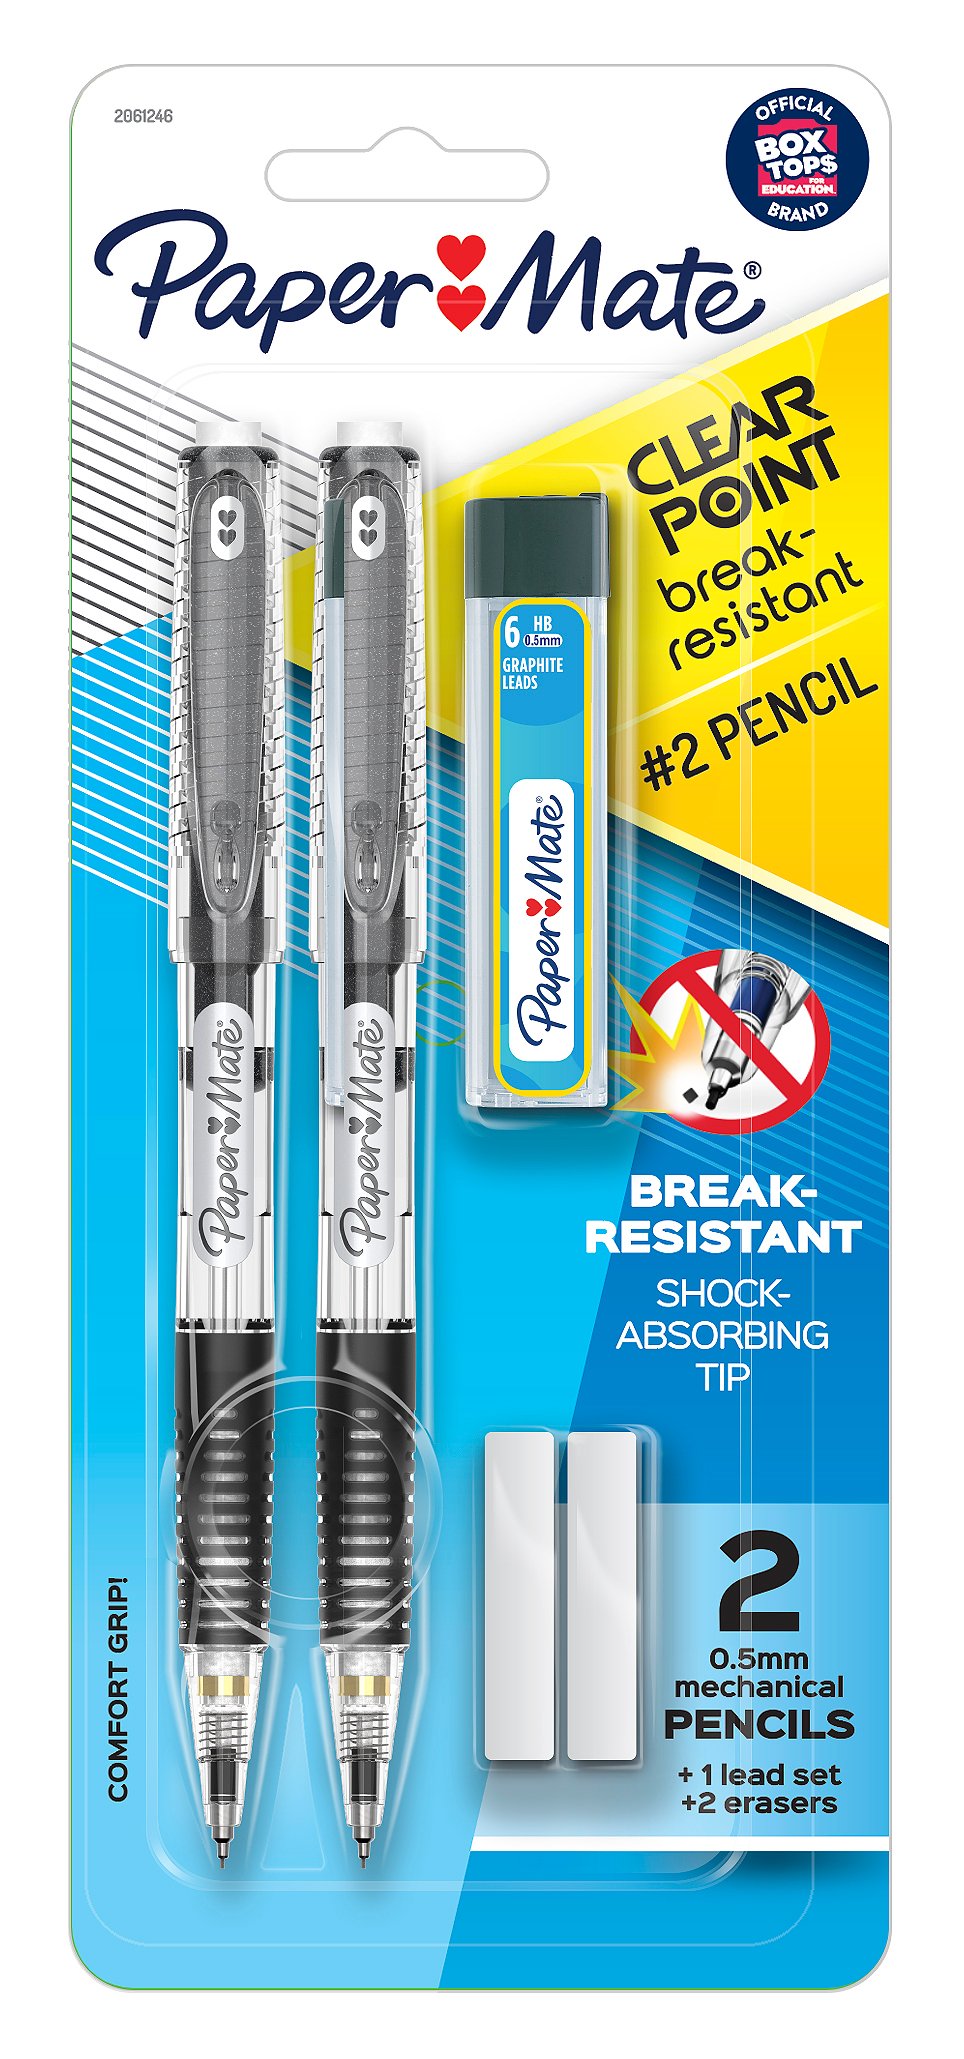 Paper Mate Clearpoint Break-Resistant Mechanical Pencil Sets, 0.5